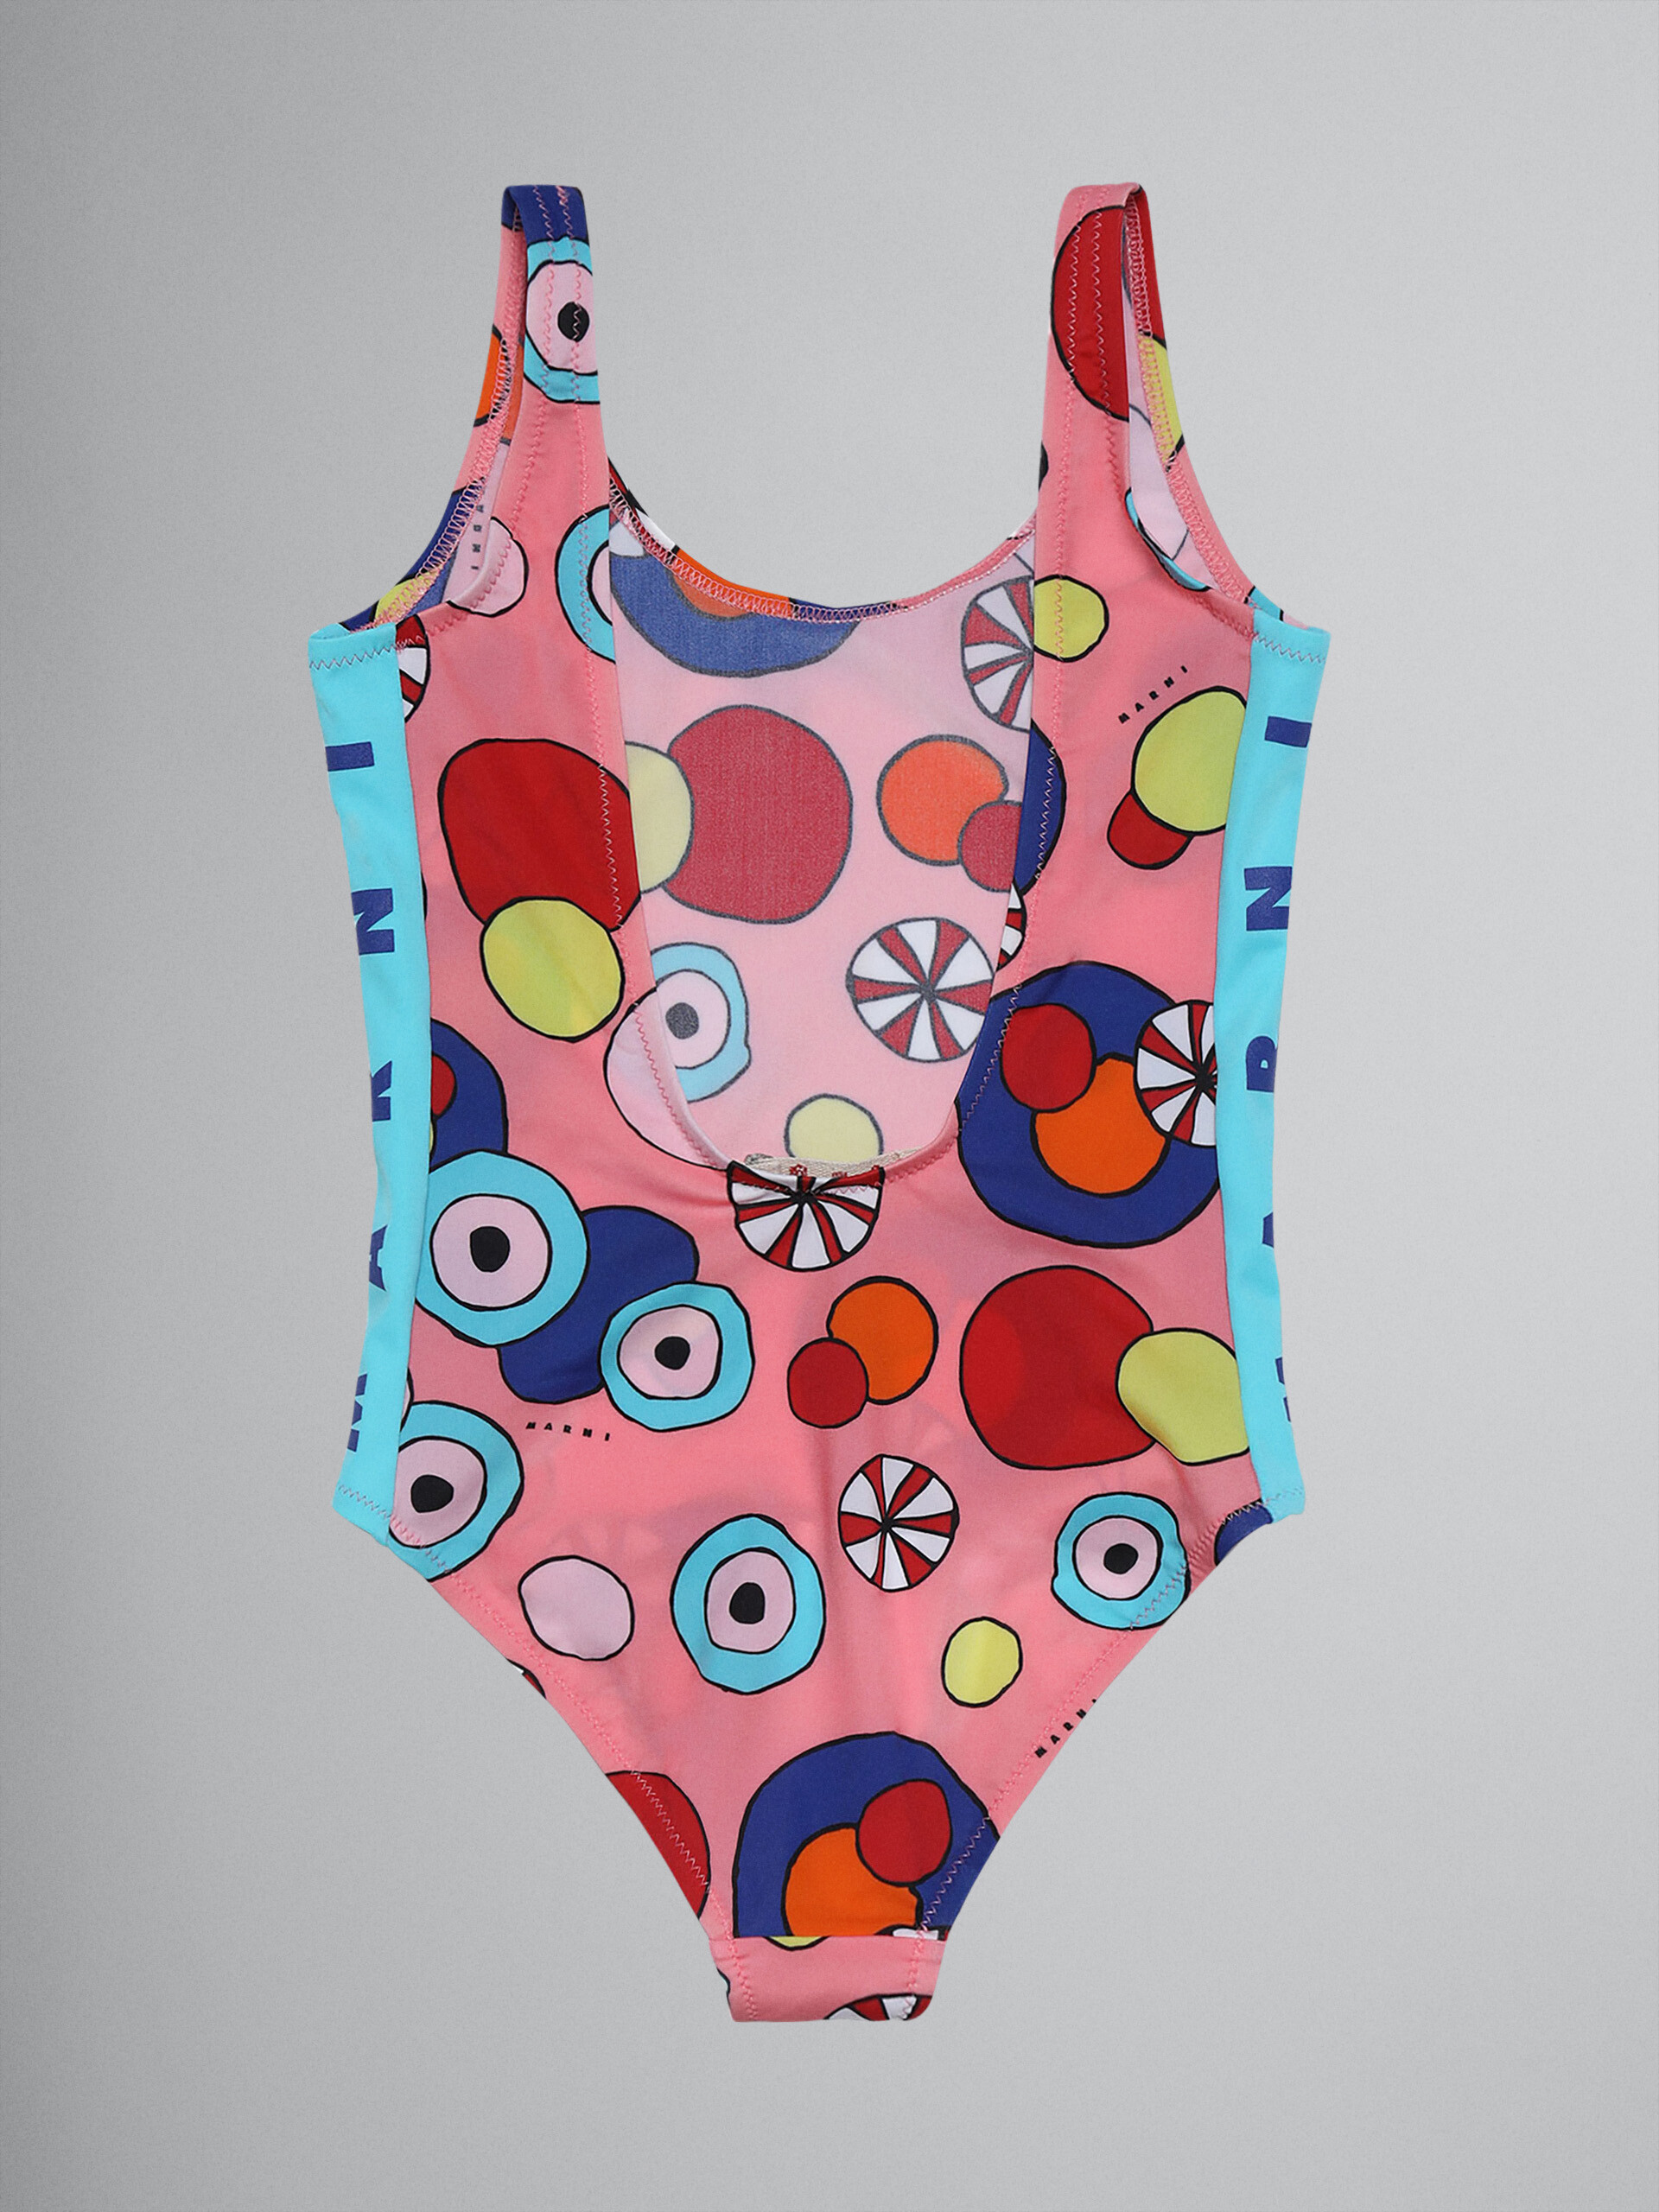 Ombrelloni print stretch fabric one-piece swimsuit - Beachwear - Image 2